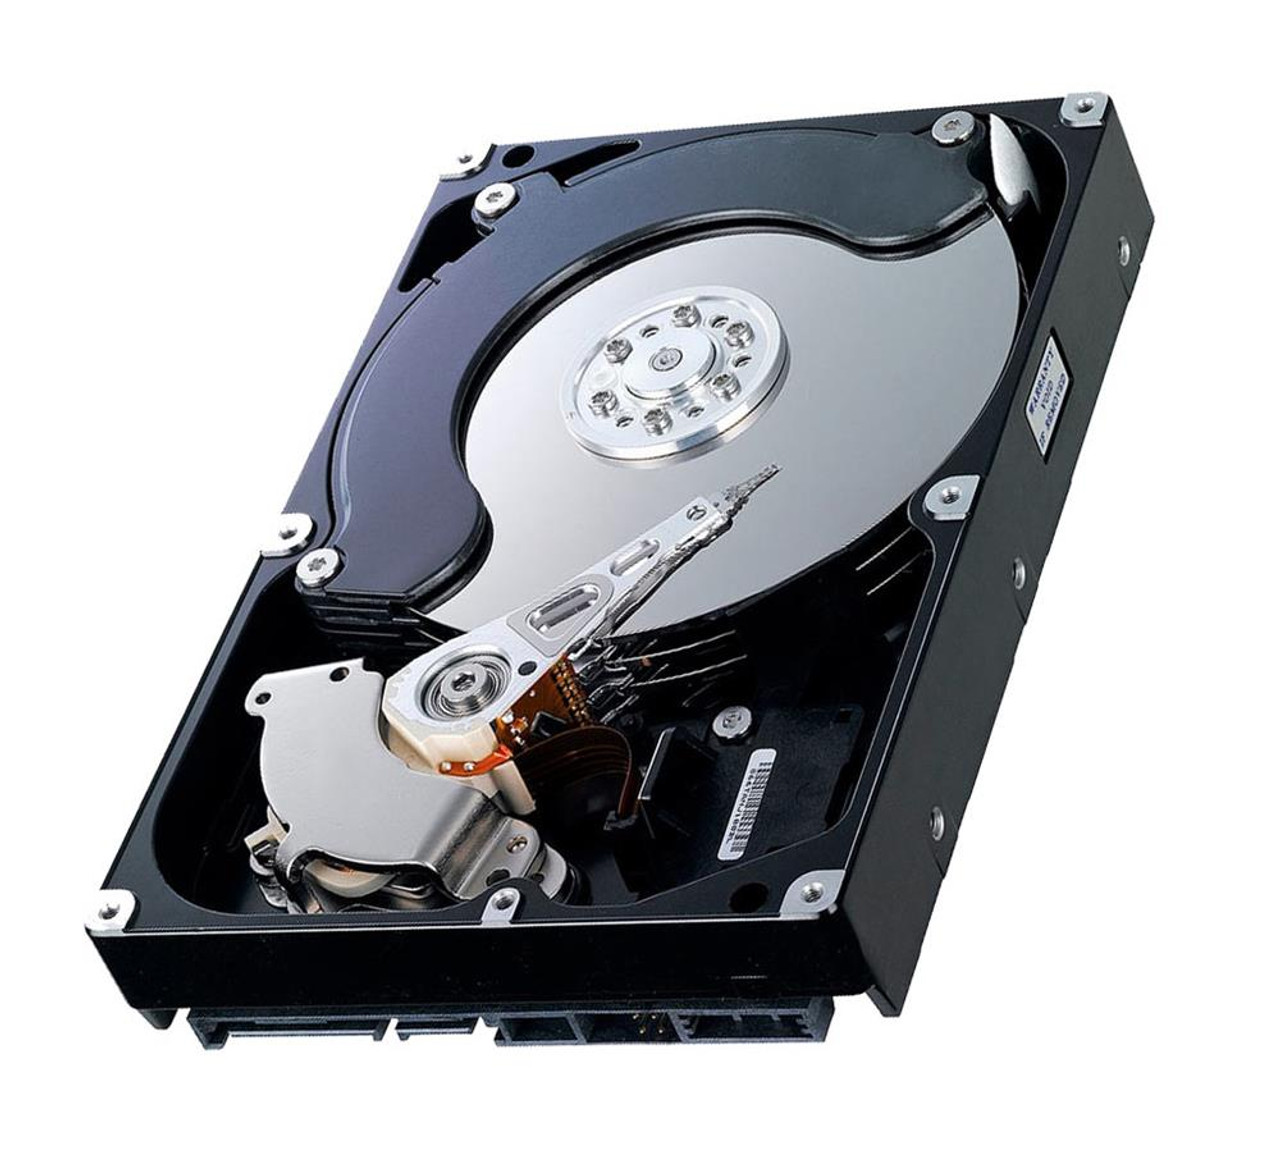 WD200BB-60BNA1 - Western Digital Caviar 20GB 7200RPM ATA-100 2MB Cache 3.5-inch Hard Disk Drive